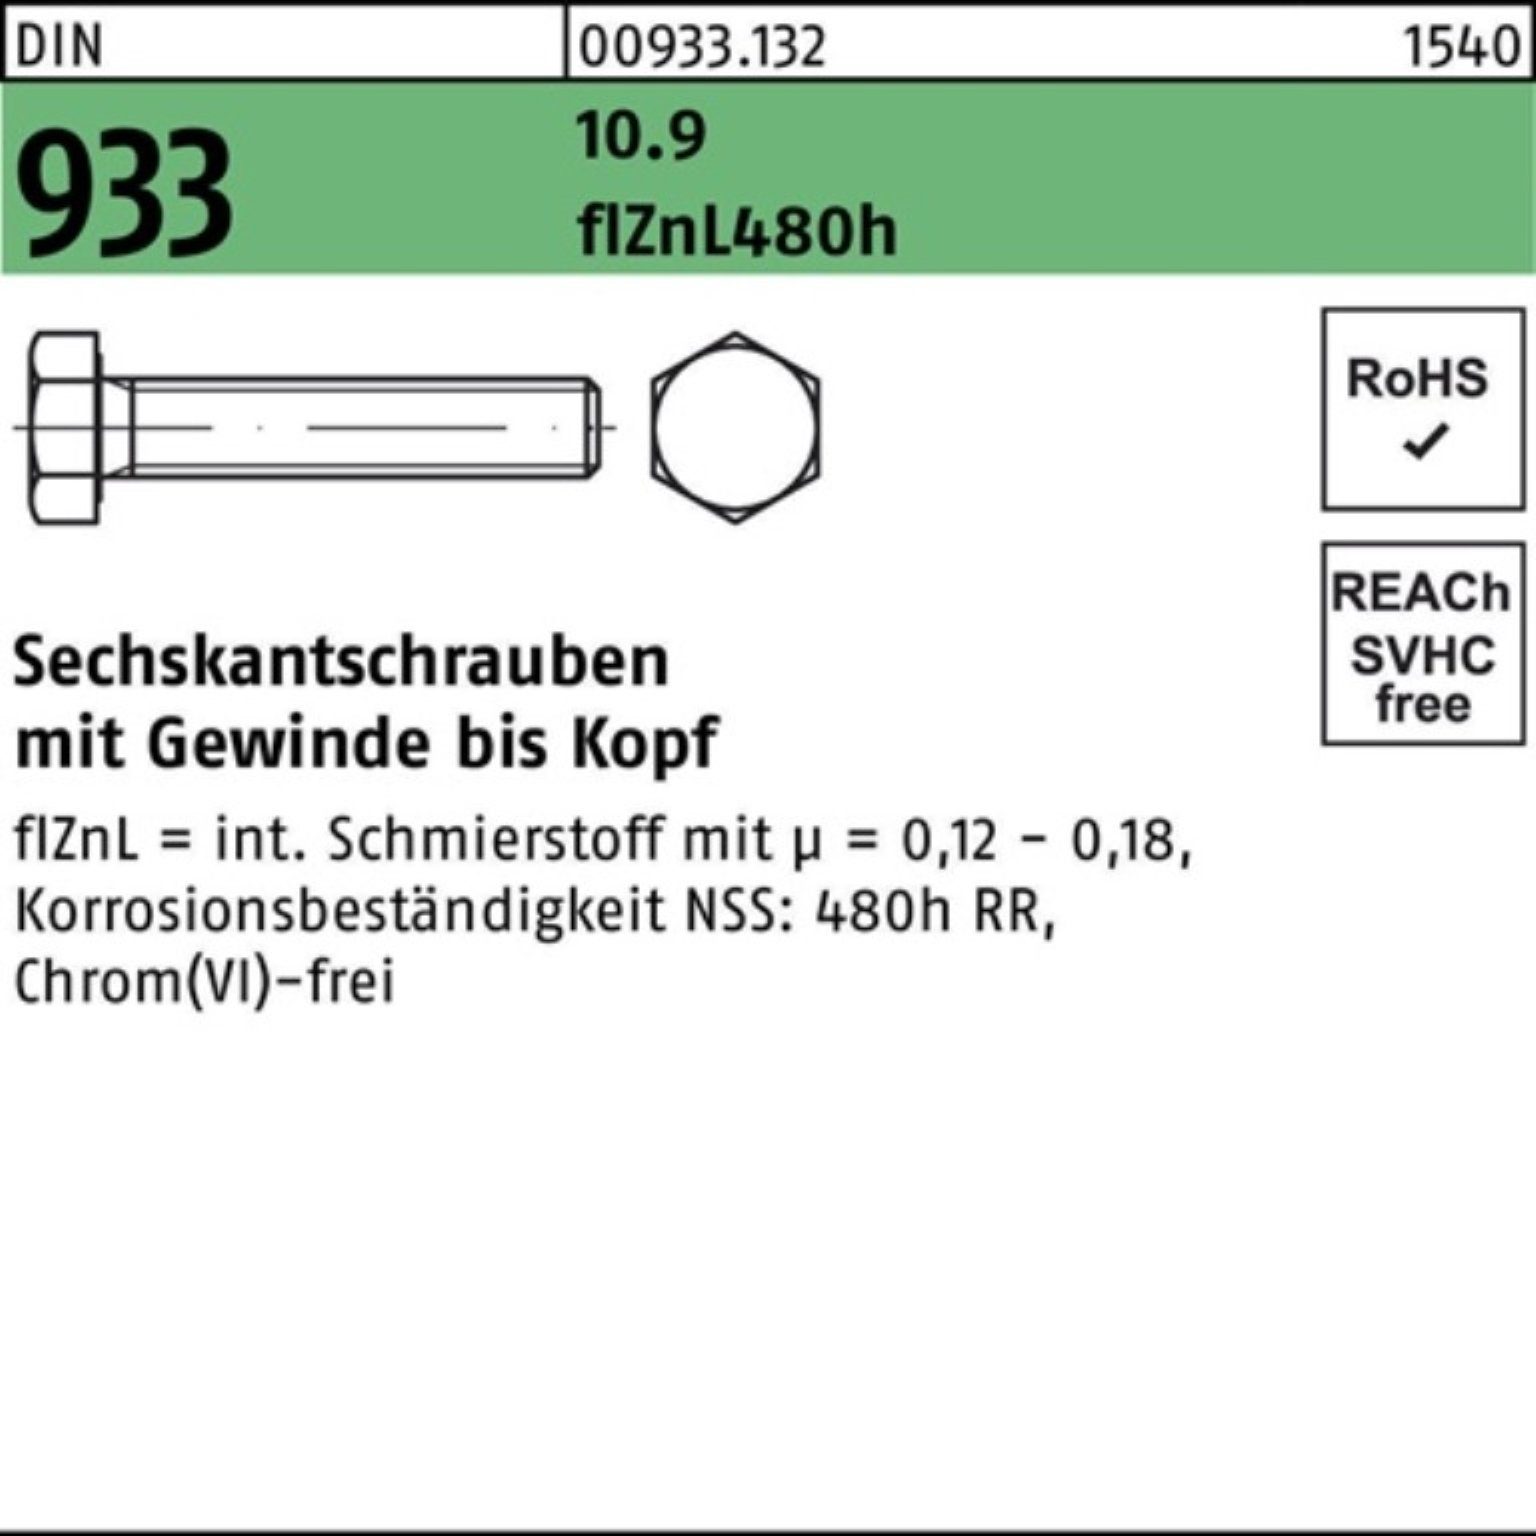 100er Reyher 30 M20x Sechskantschraube 933 Pack Sechskantschraube DIN VG 10.9 flZnL/nc/x/x/480h